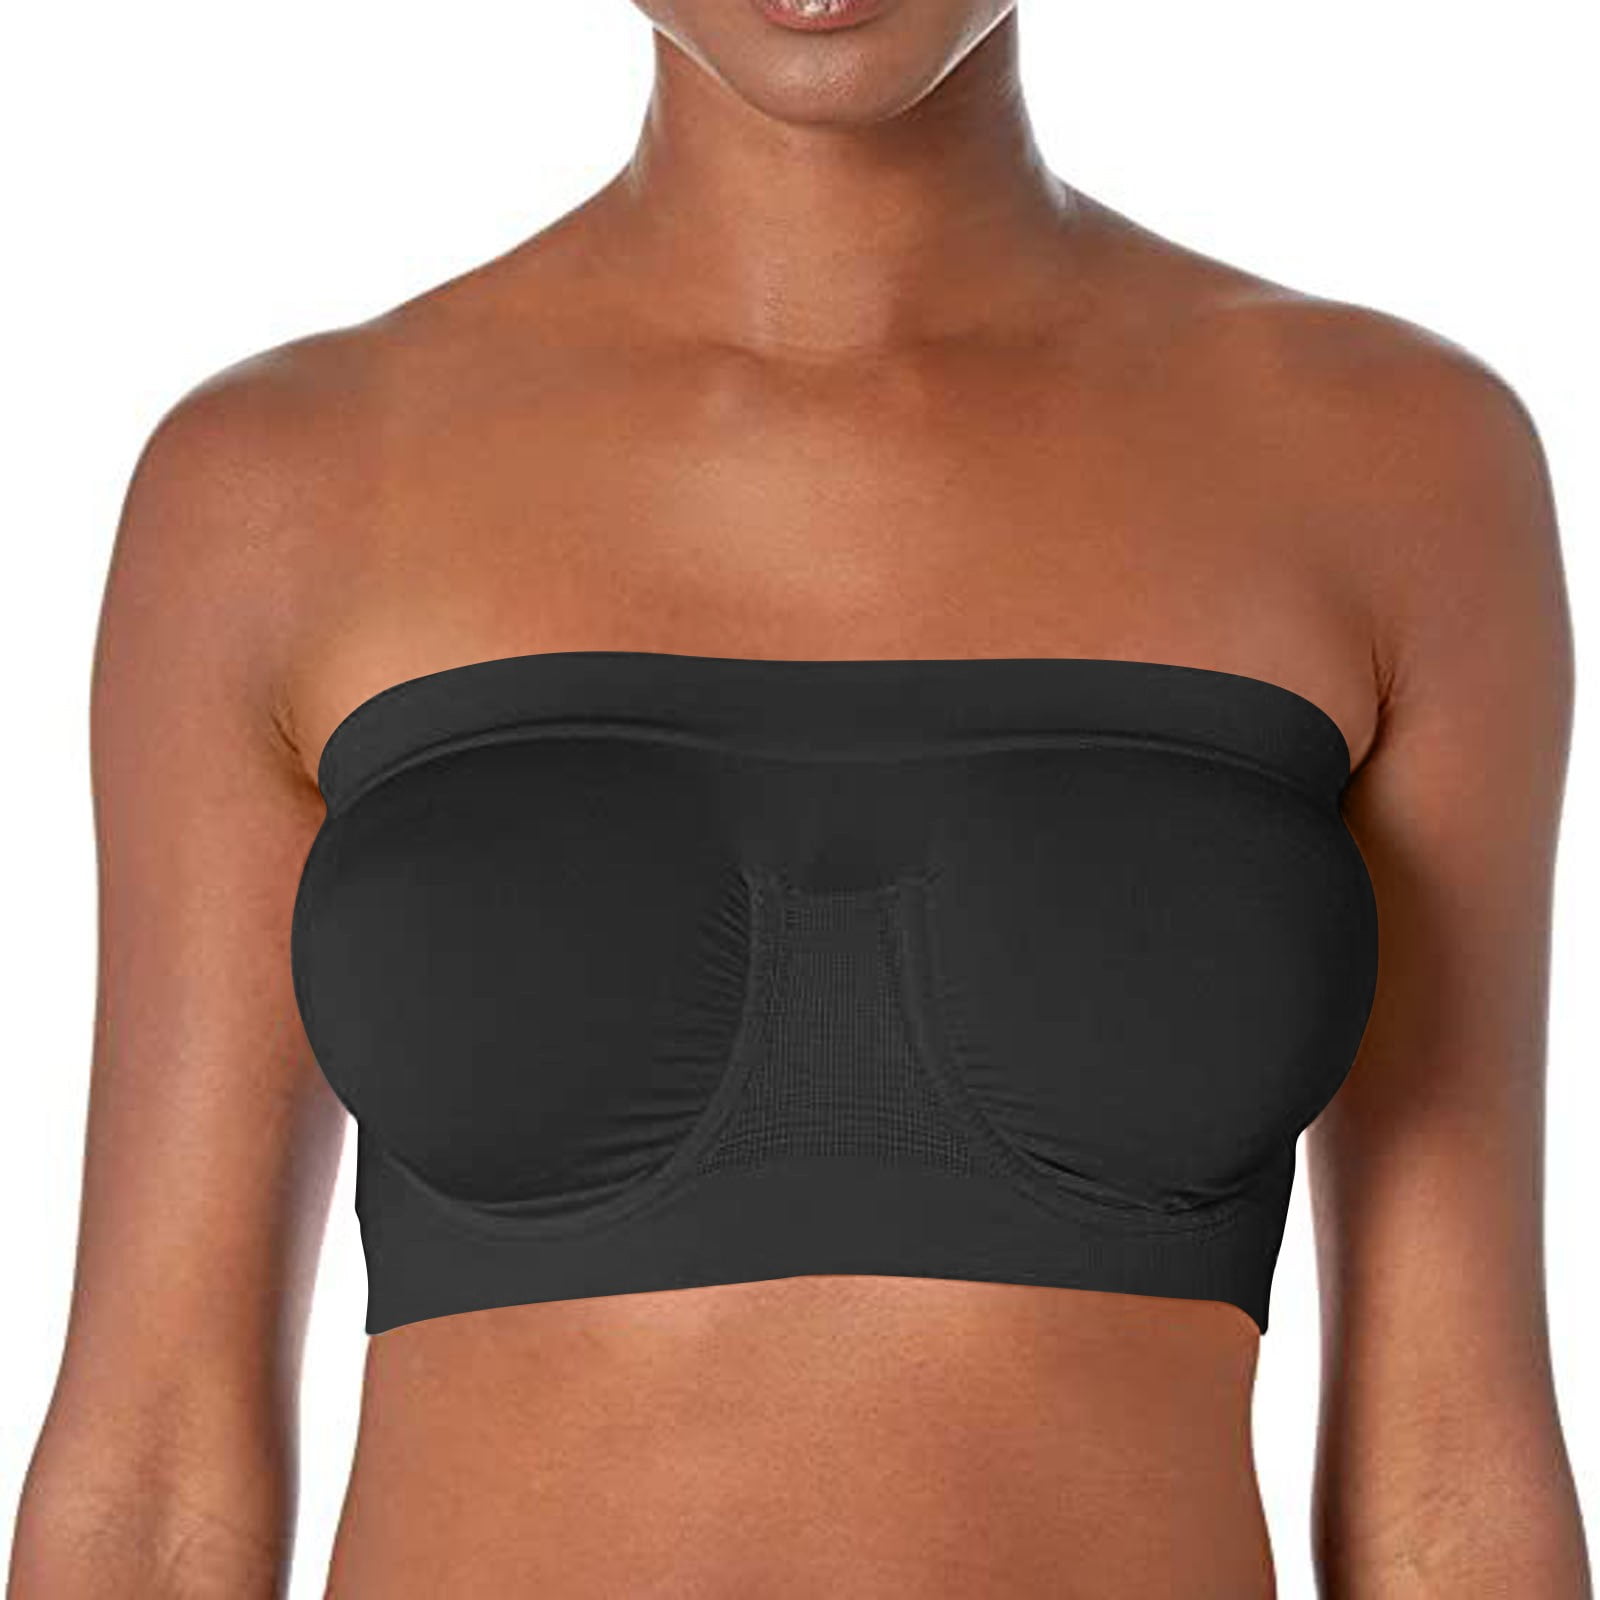 Qcmgmg Women Bandeaus Comfort Support Strapless Bra T-shirt Seamless Plus  Size Wireless Bra